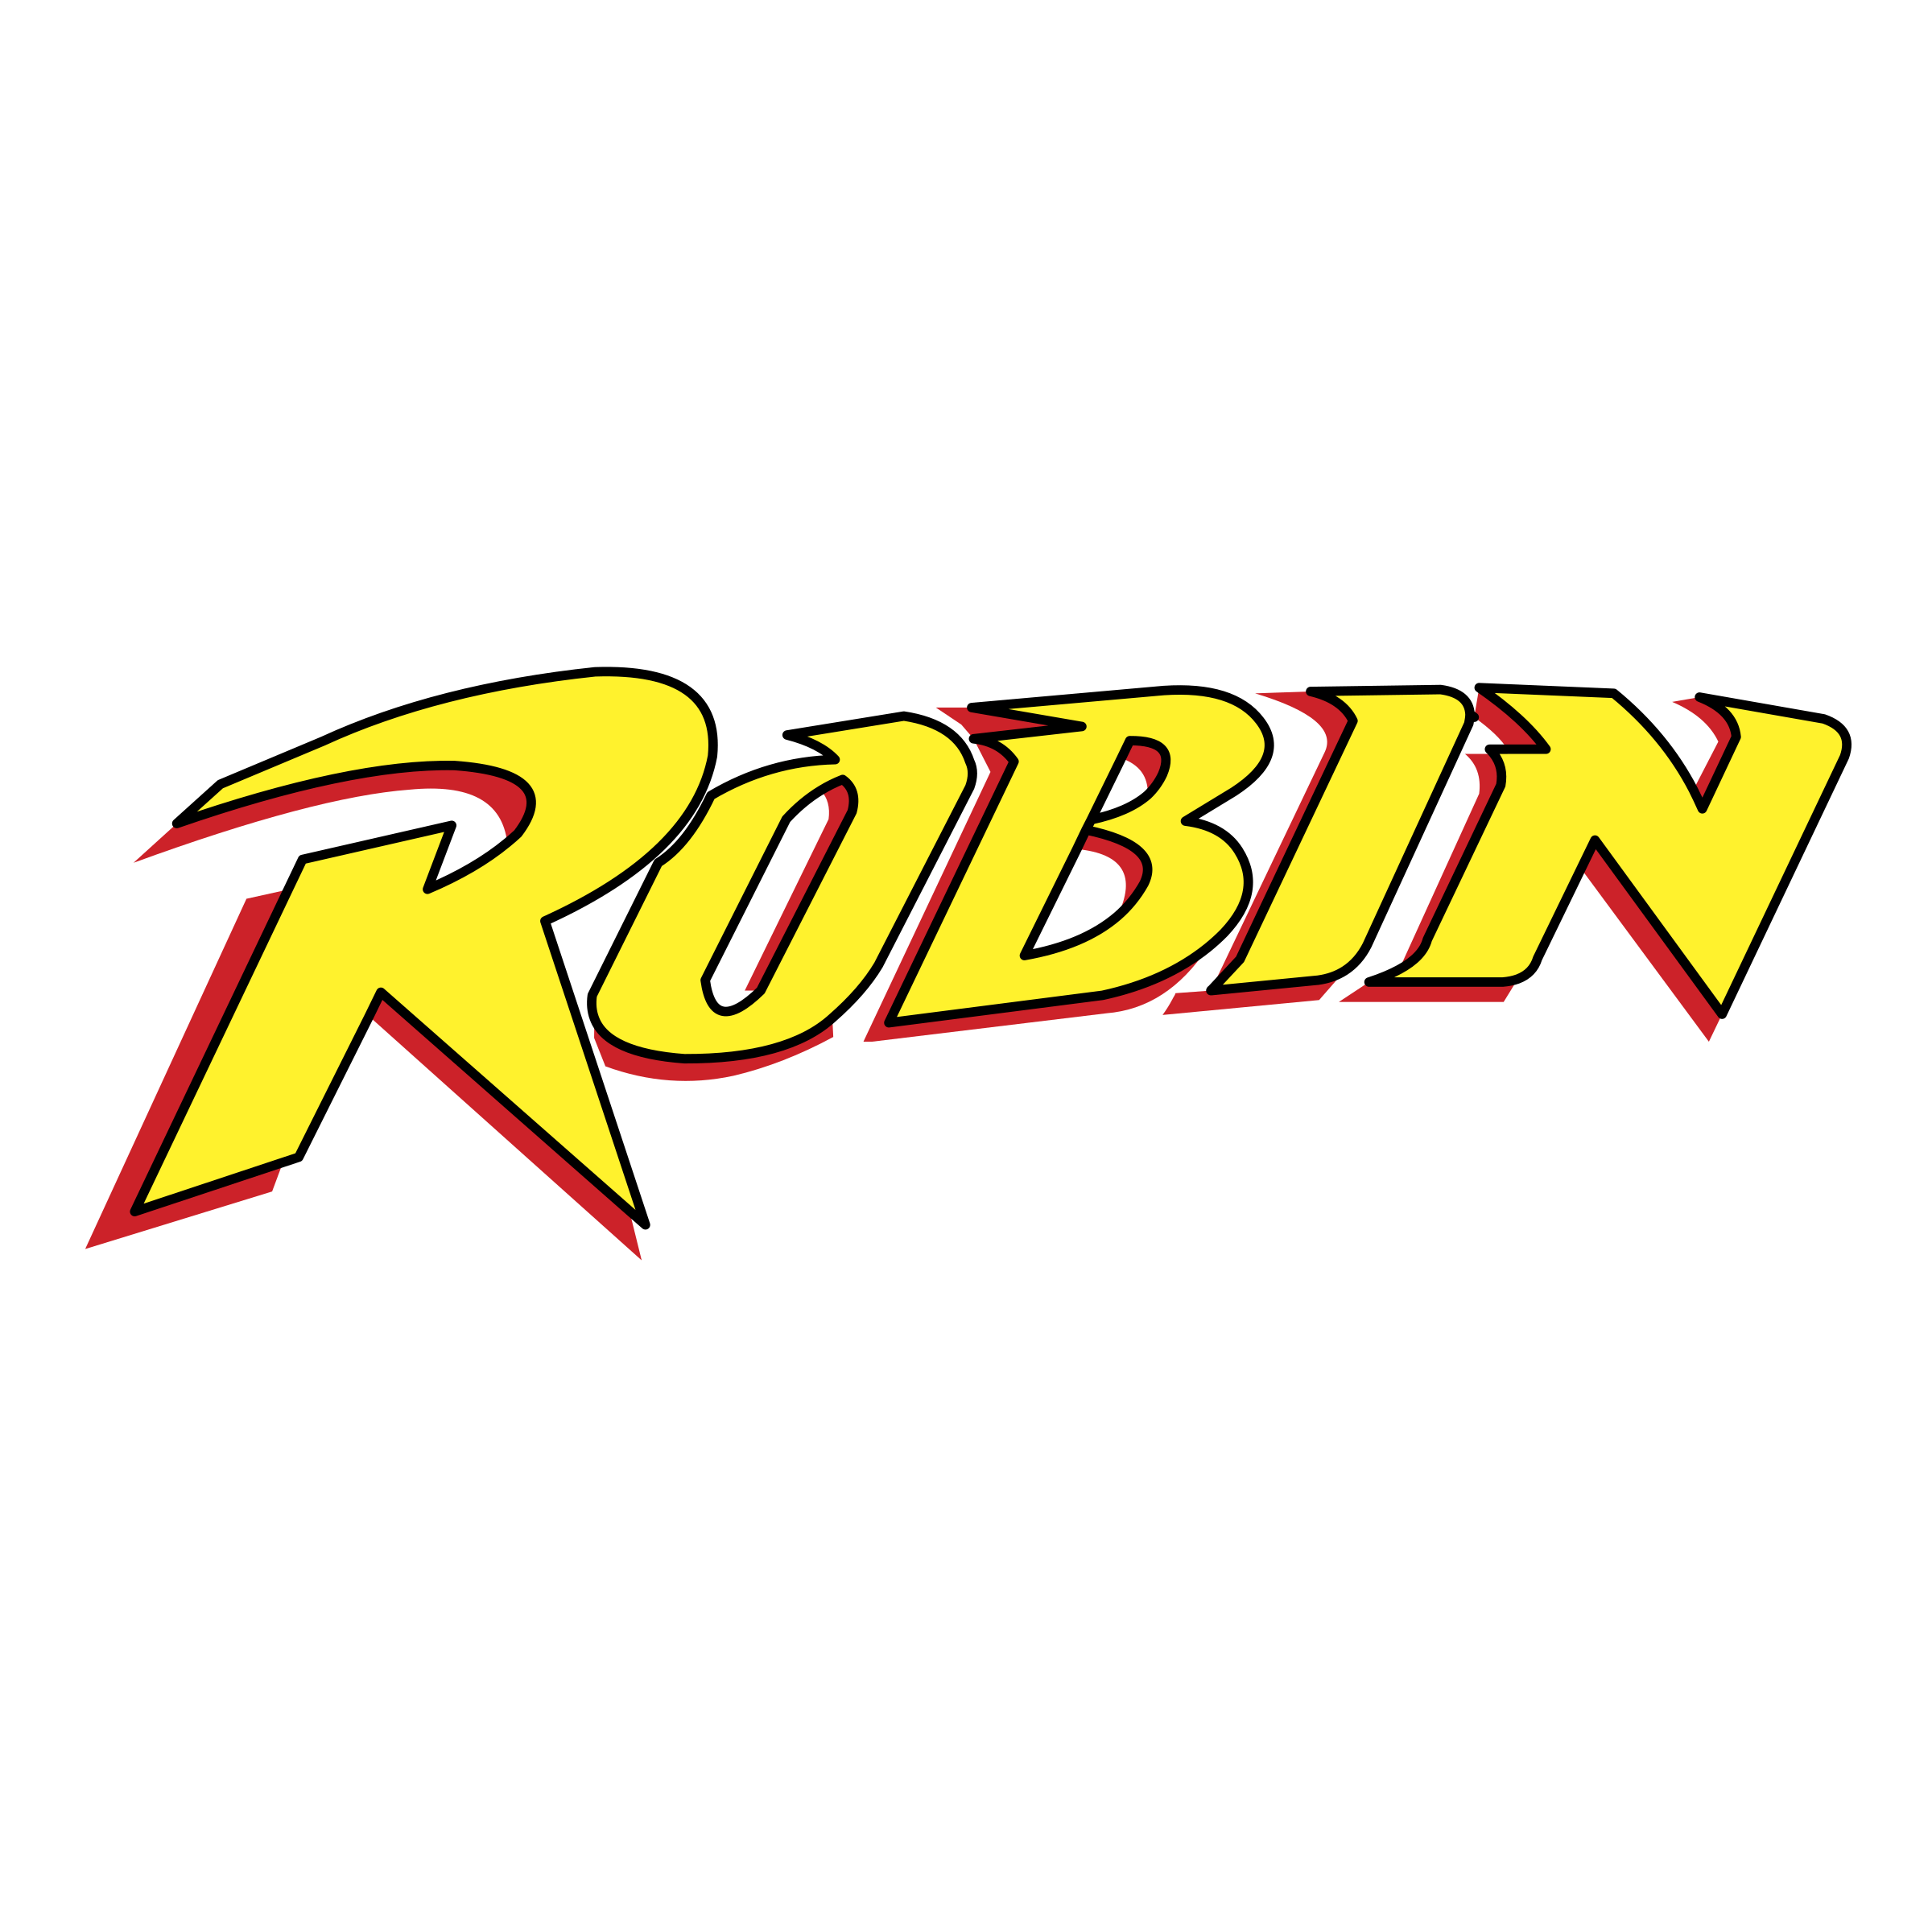 Robin Logo - Robin Logo PNG Transparent & SVG Vector - Freebie Supply